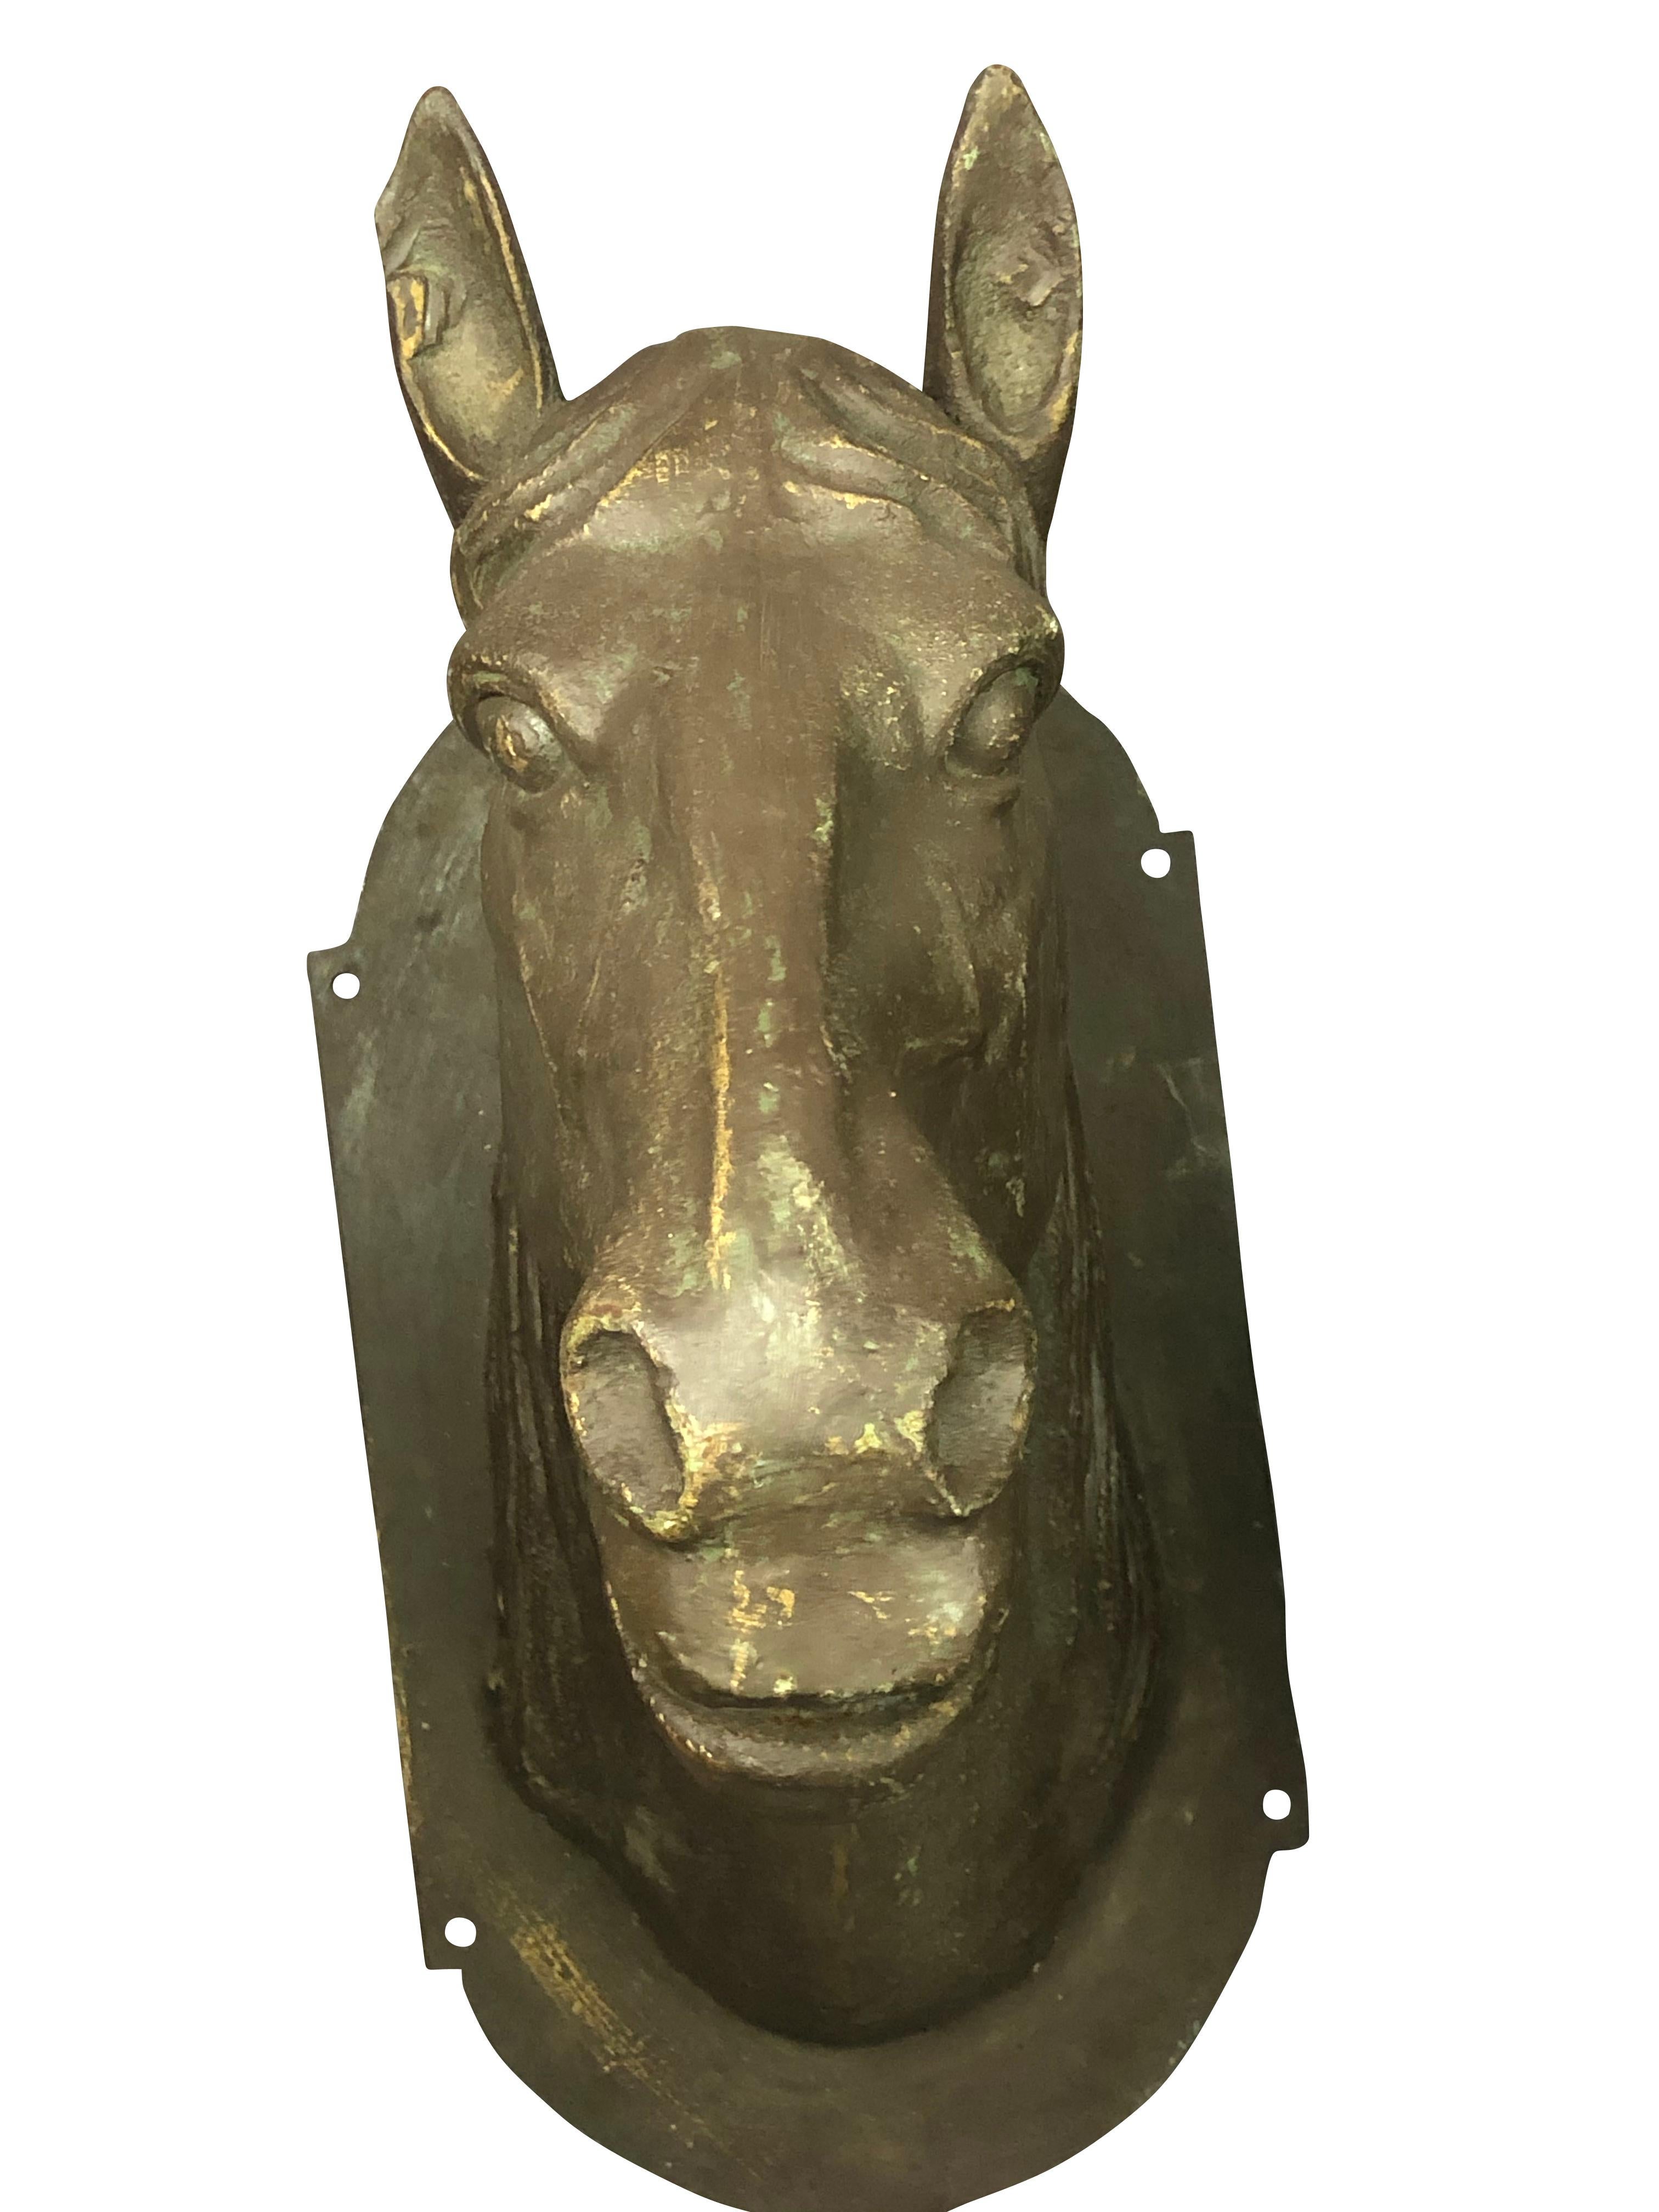 Contemporary Horse Head Sculptures Life-Size Mixed Metal